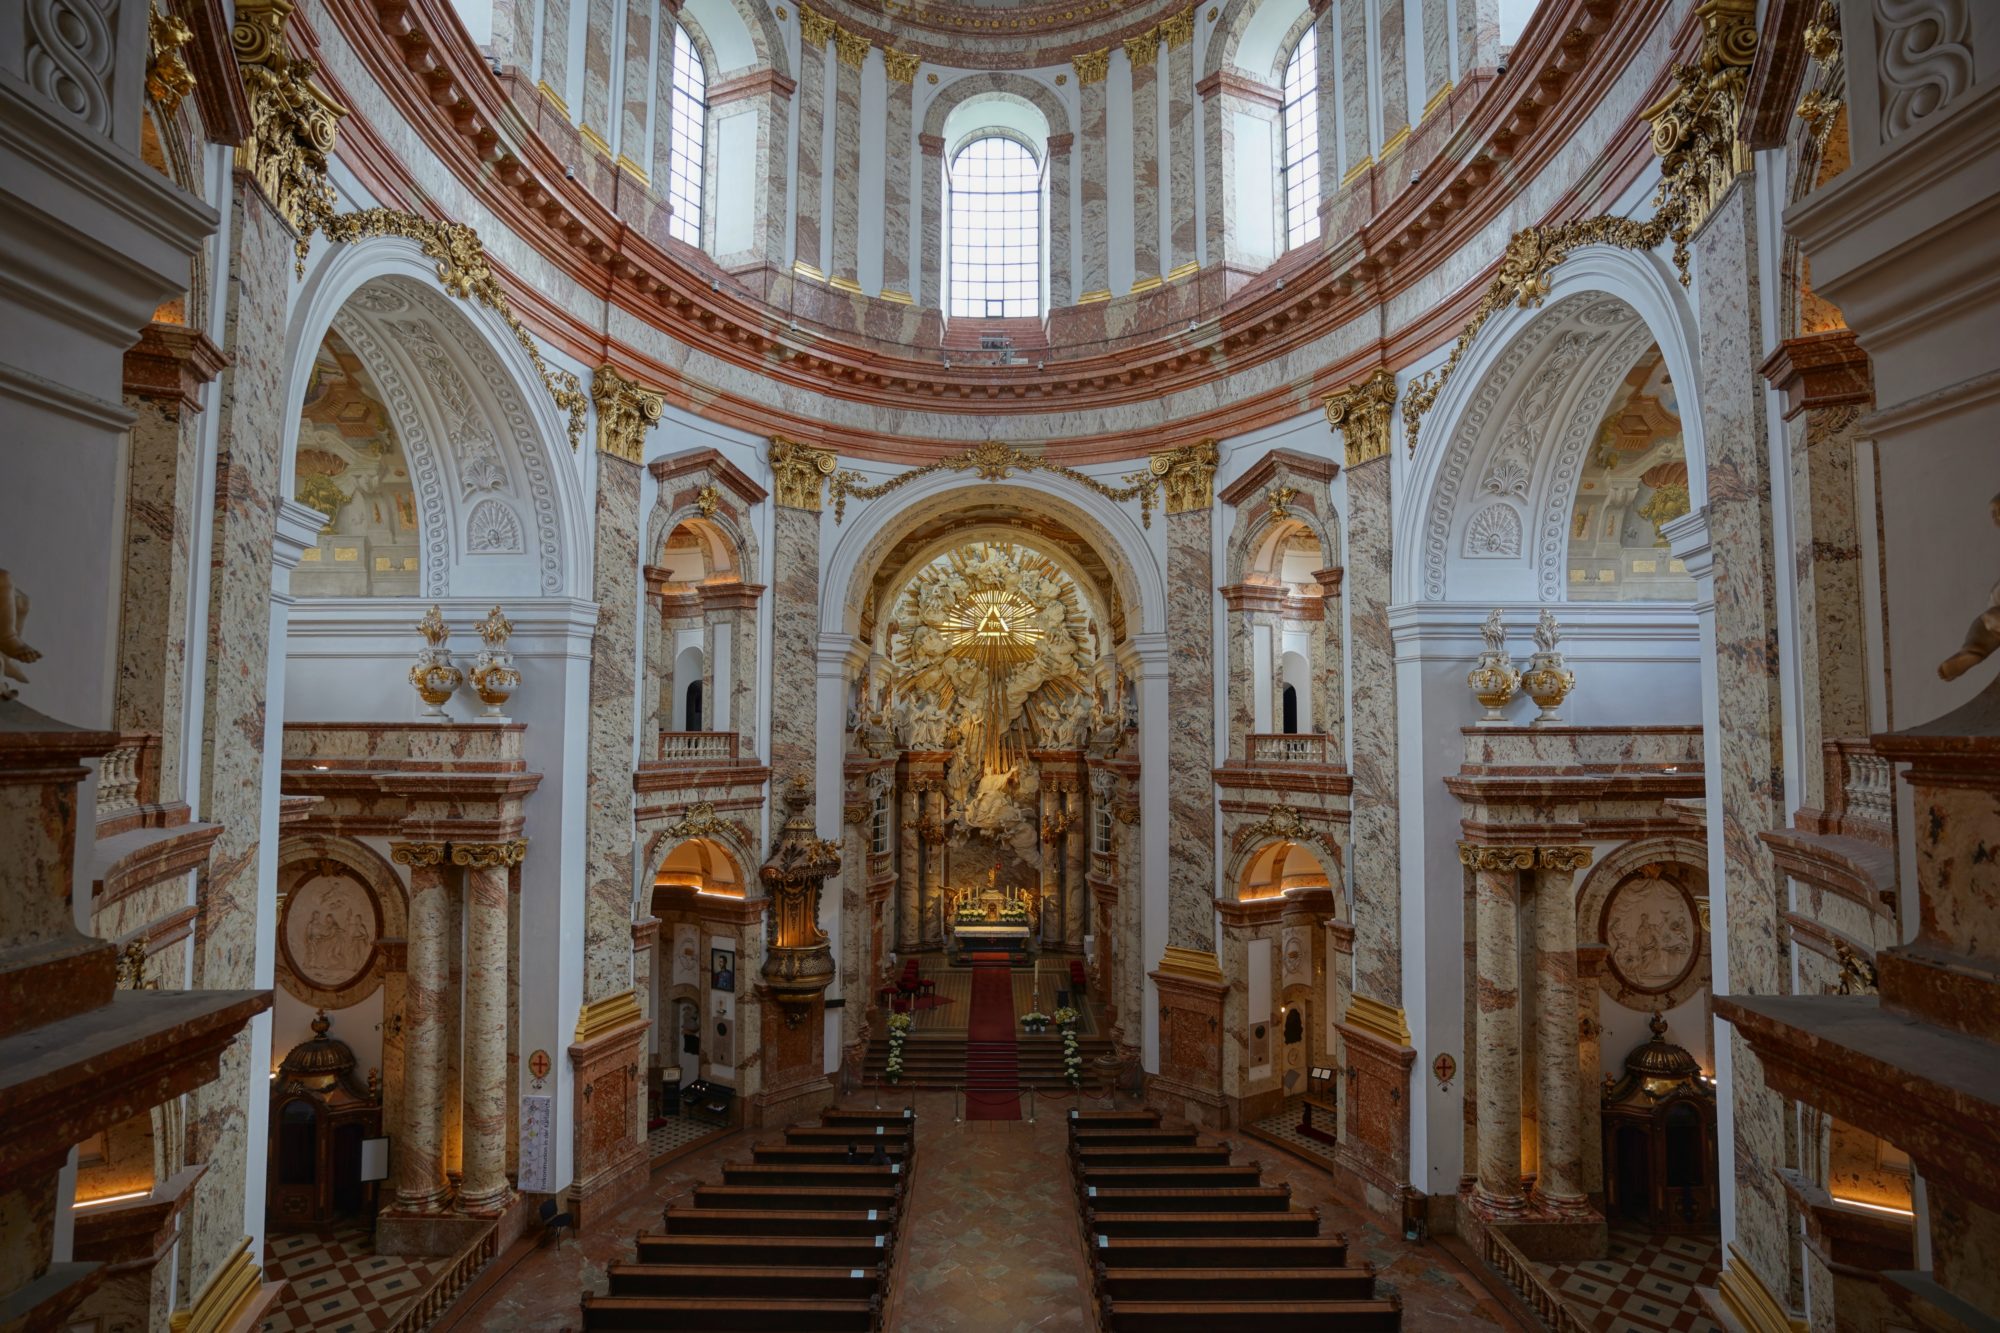 St. Charles Borromeo, a richly decorated church interior